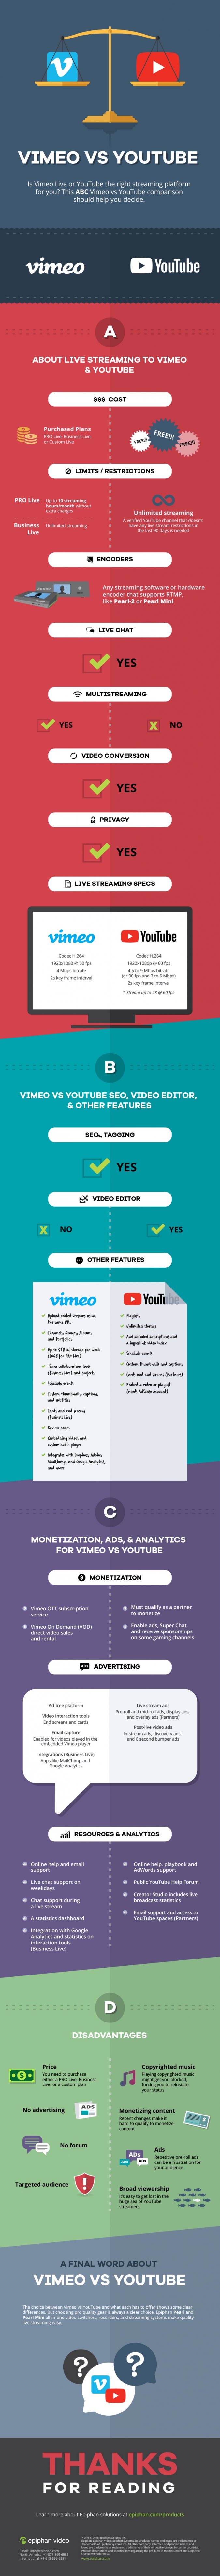 YouTube Marketing vs. Vimeo Marketing: Der Social Media Video Plattformen Vergleichs Check [Infografik]